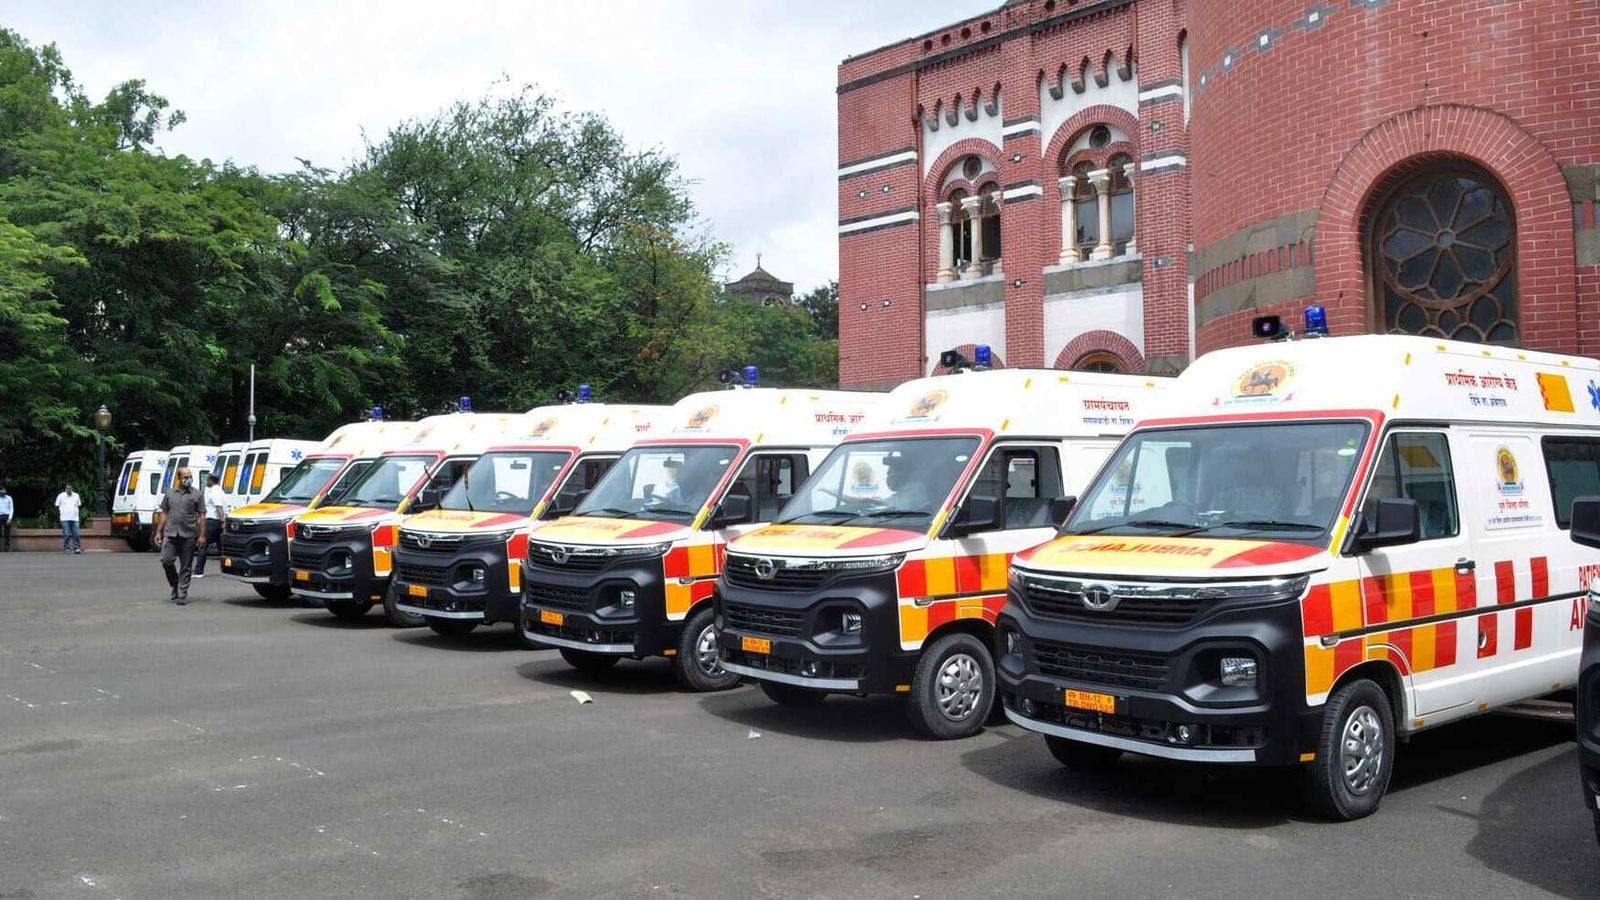 Tata Winger Ambulances for the Government of Madhya Pradesh